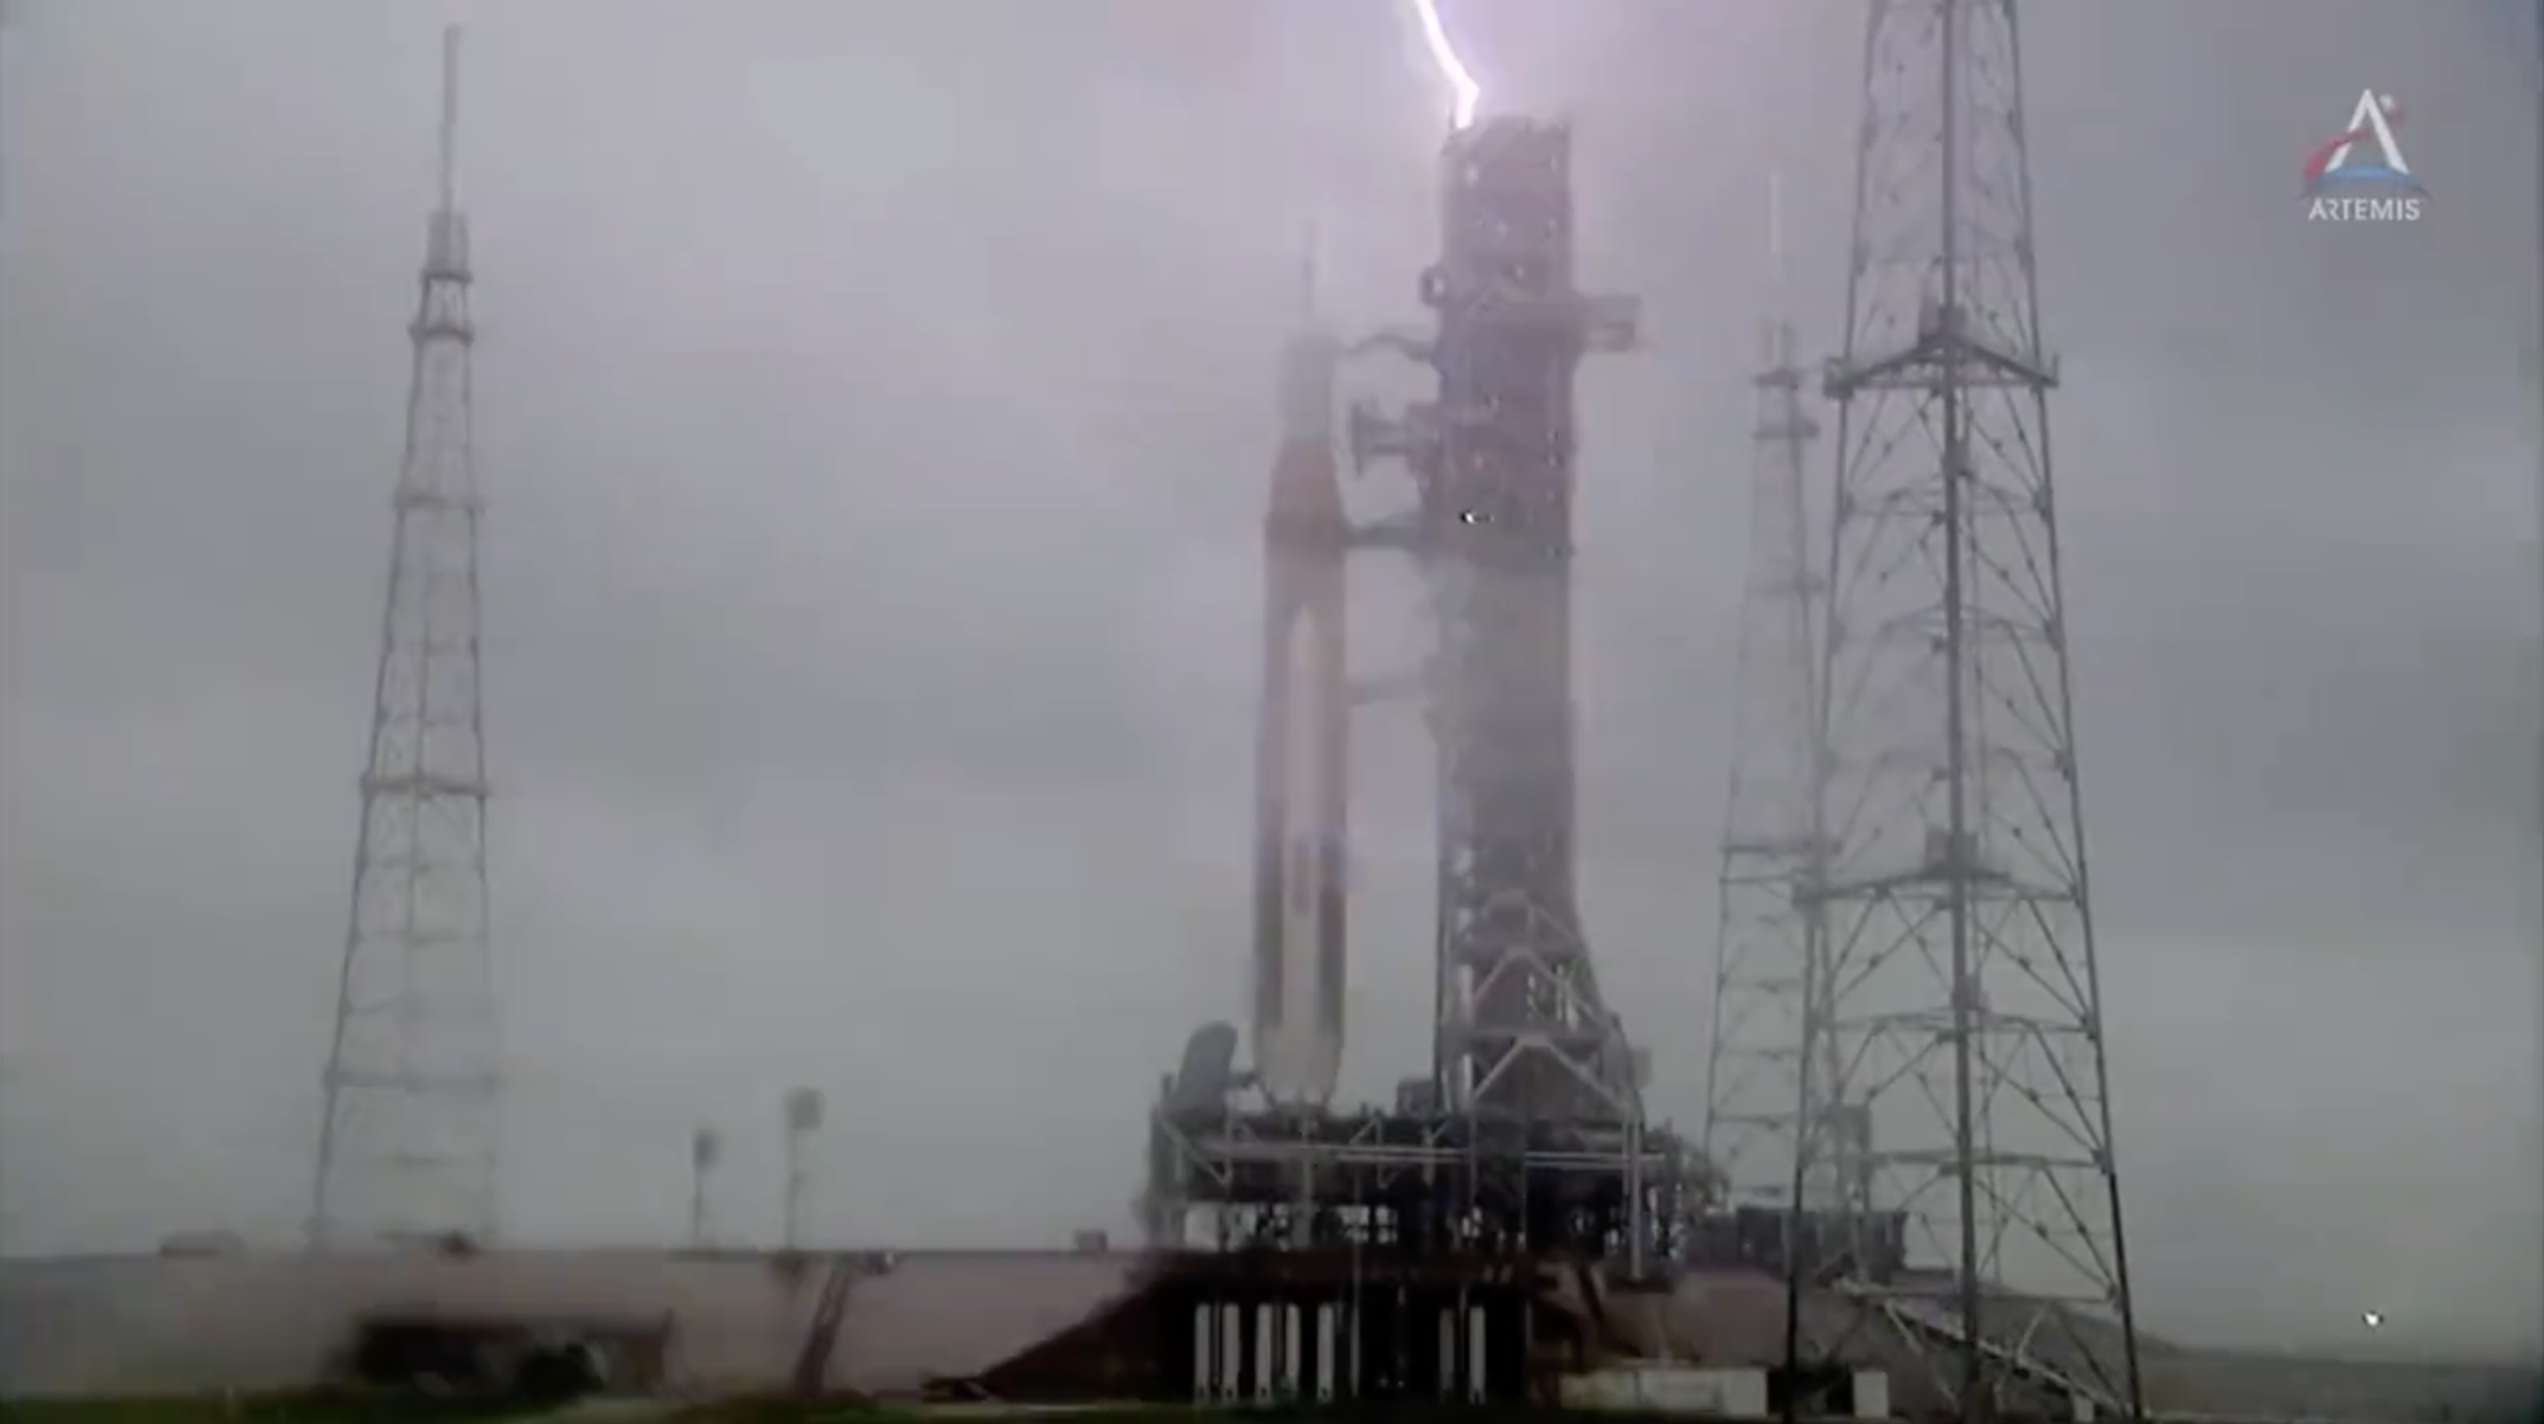 Artemis I rocket takes last road trip despite lightning